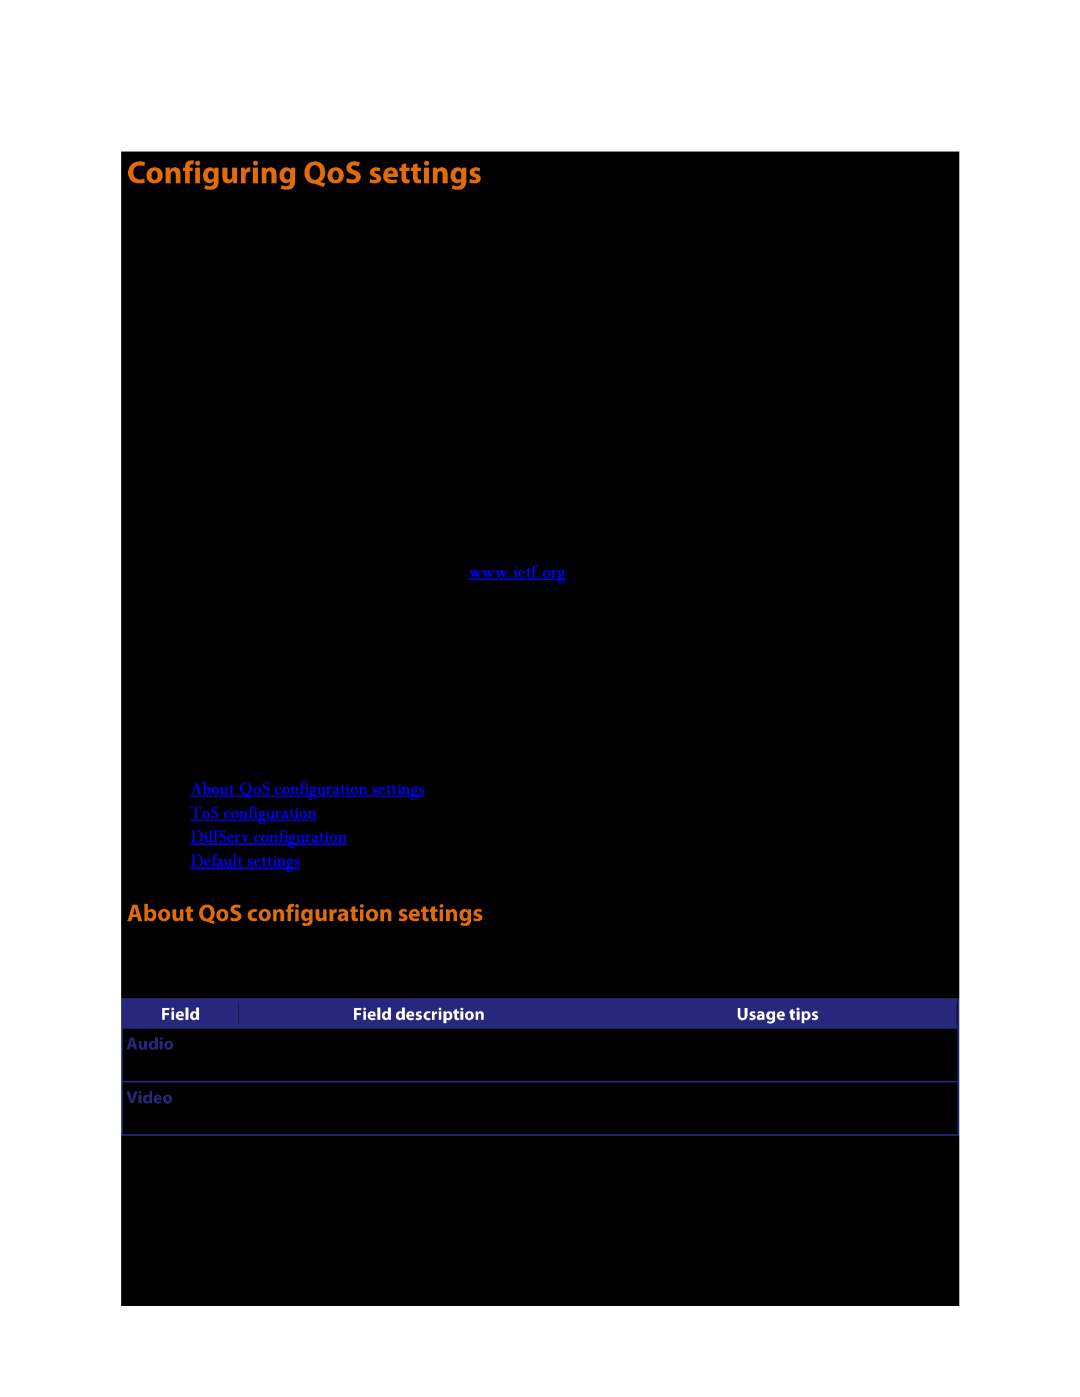 TANDBERG MSE 8510, MCU 4500 About QoS configuration settings ToS configuration, DiffServ configuration Default settings 